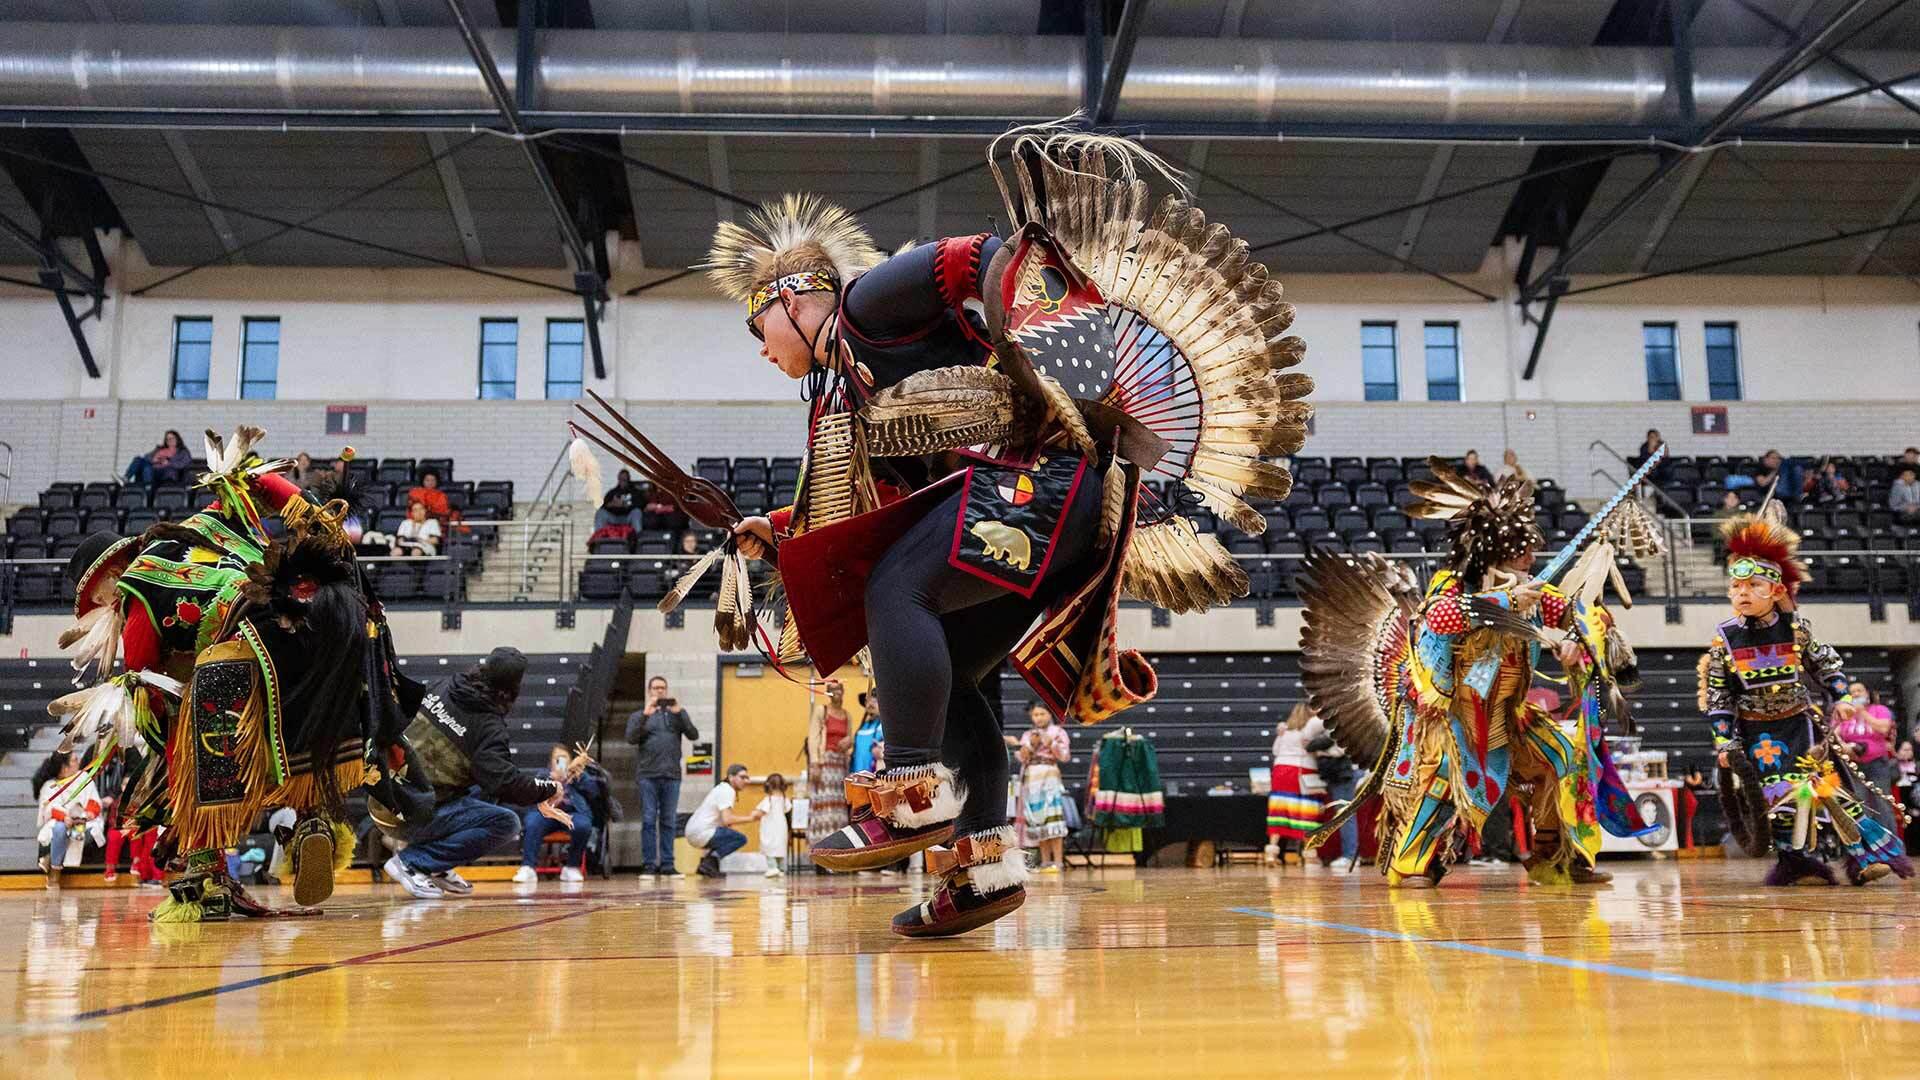 traditional American Indian dancer dances